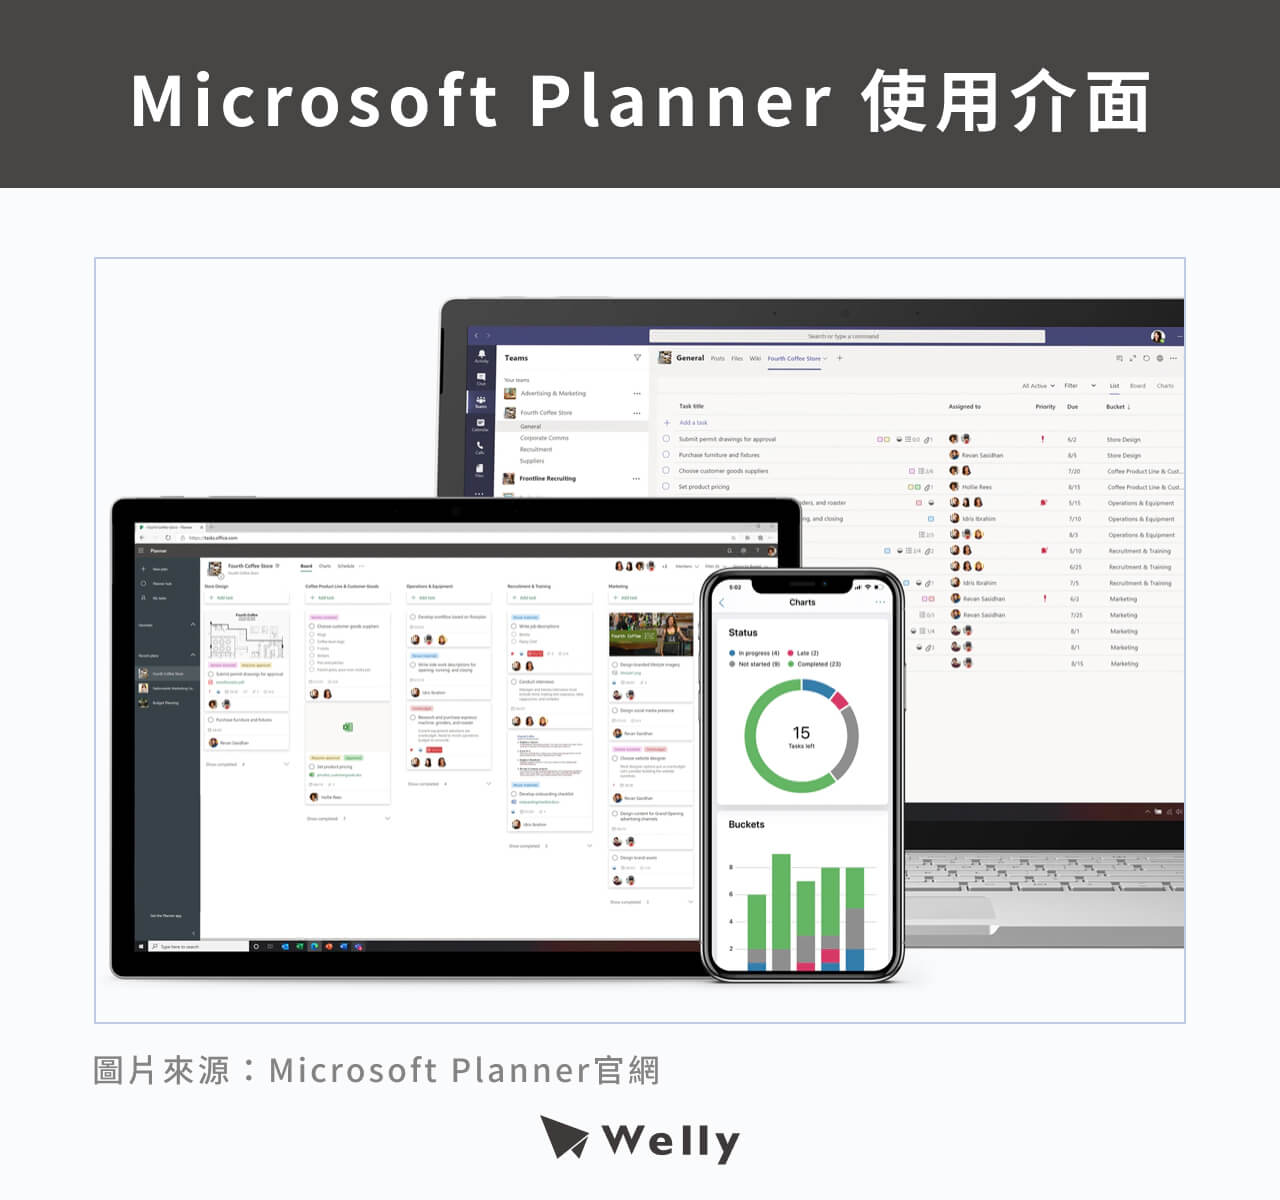 Microsoft Planner 使用介面